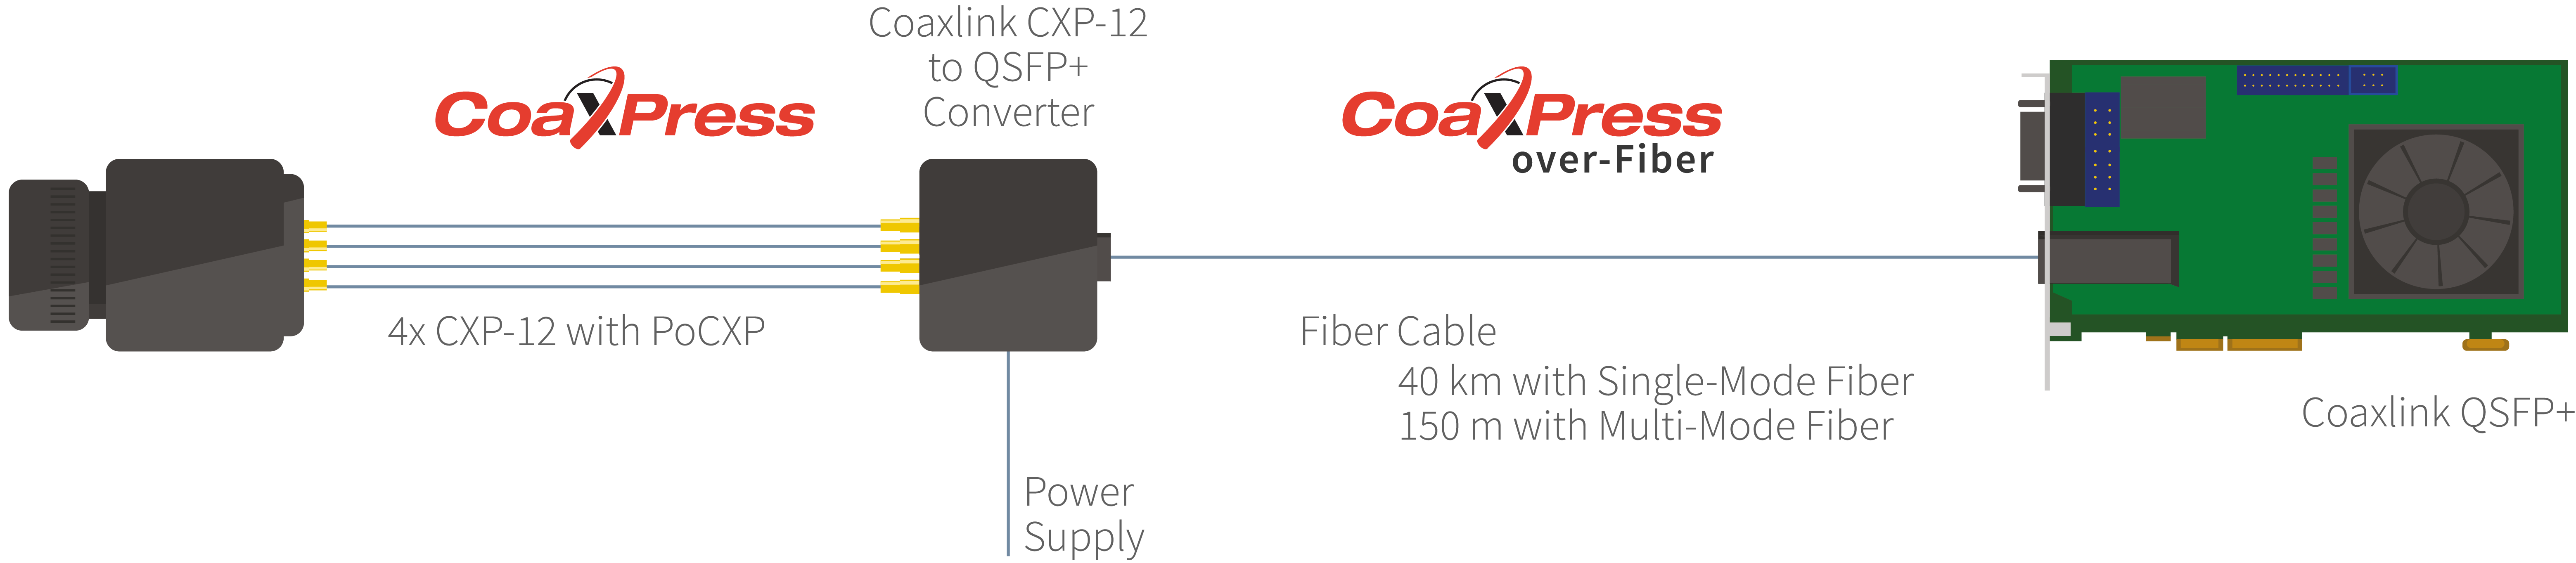 CXP-12カメラからCoaxlink QSFP+フレームグラバーに接続